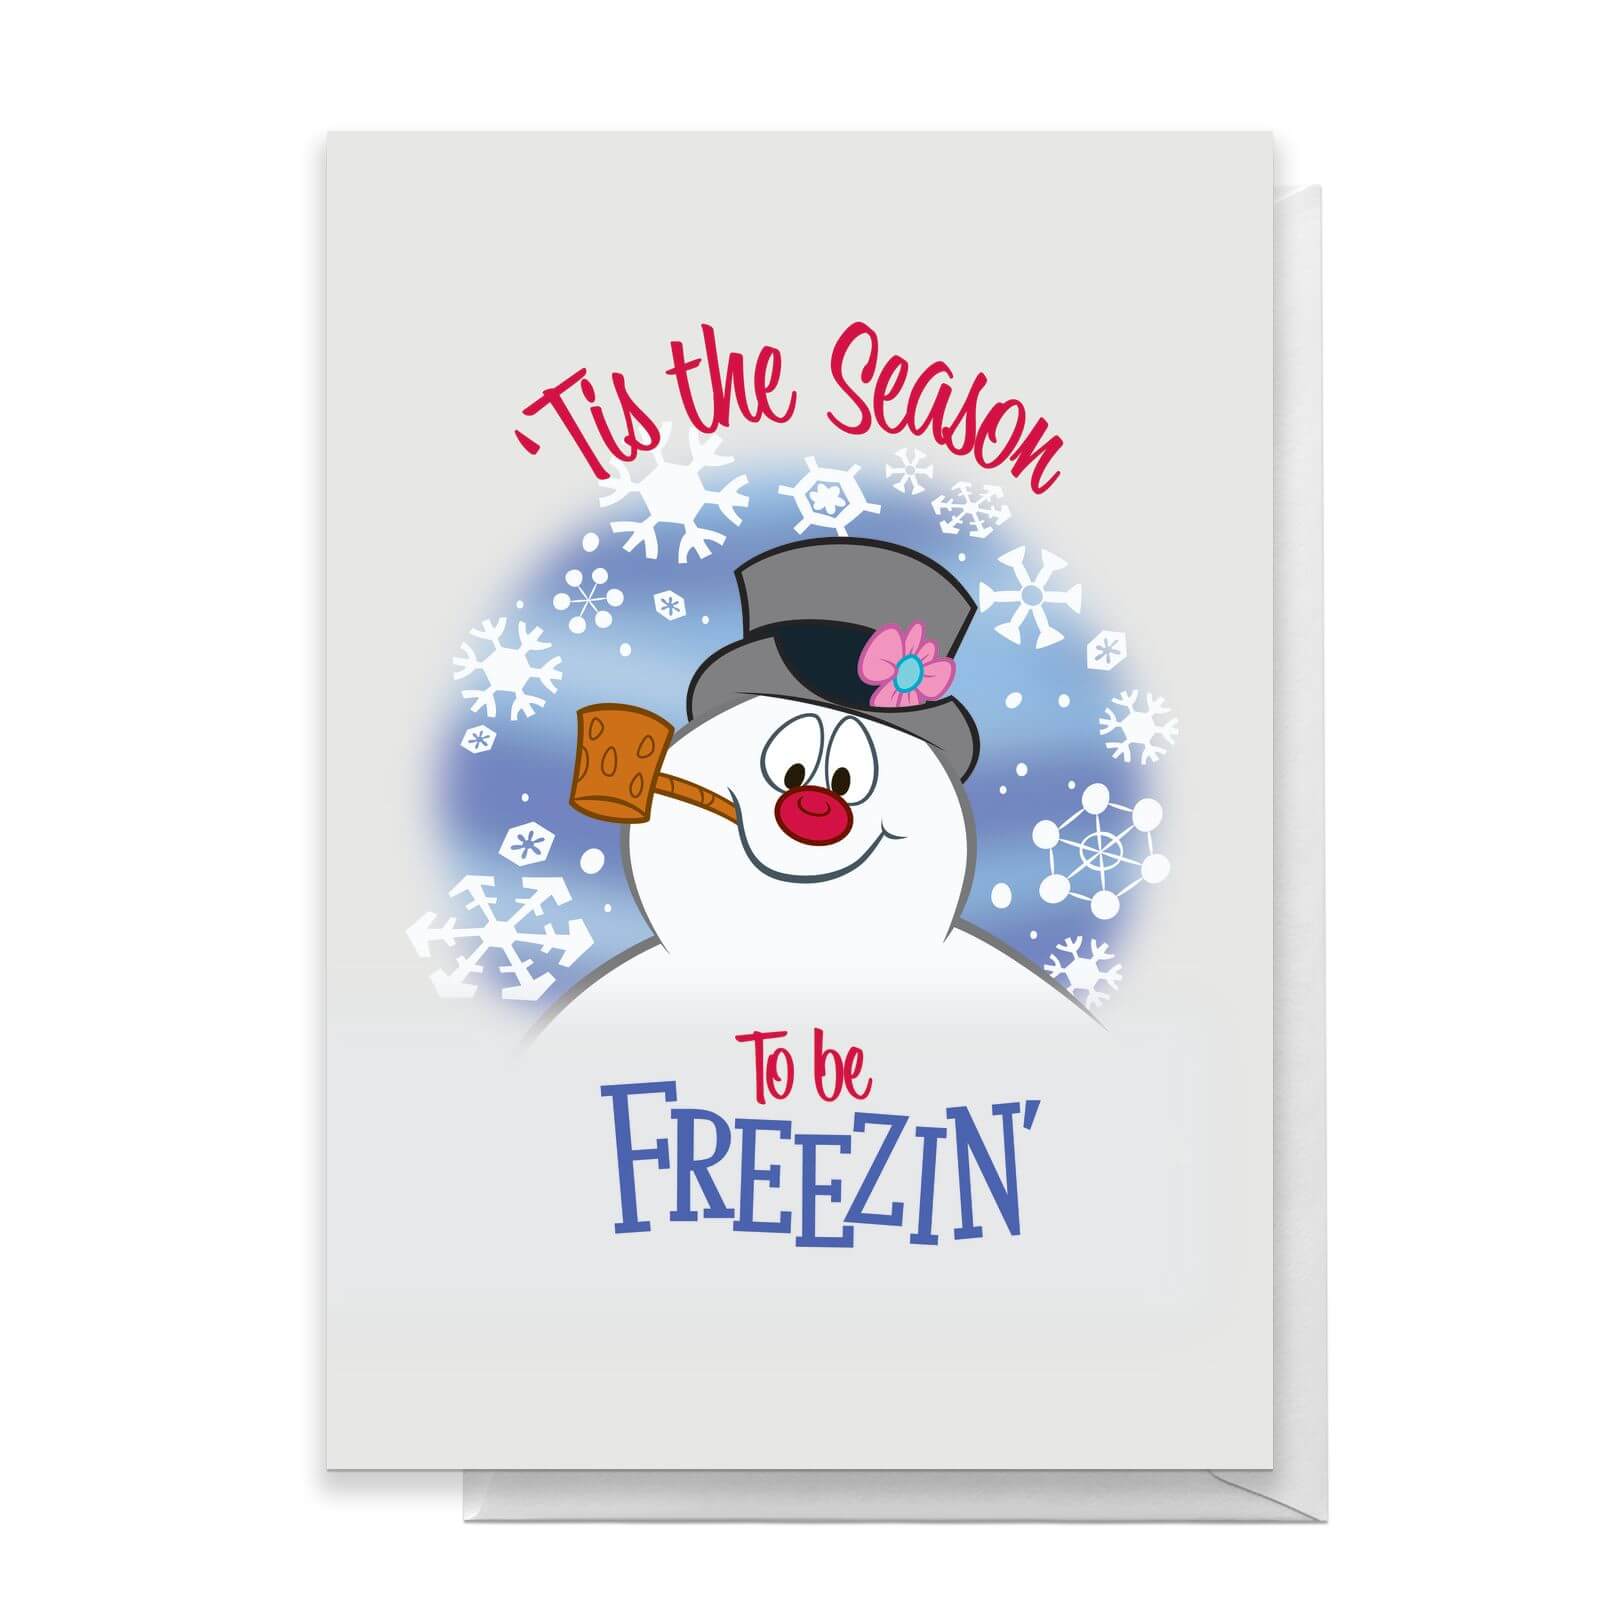 Tis The Season To Be Freezin Greetings Card   Standard Card